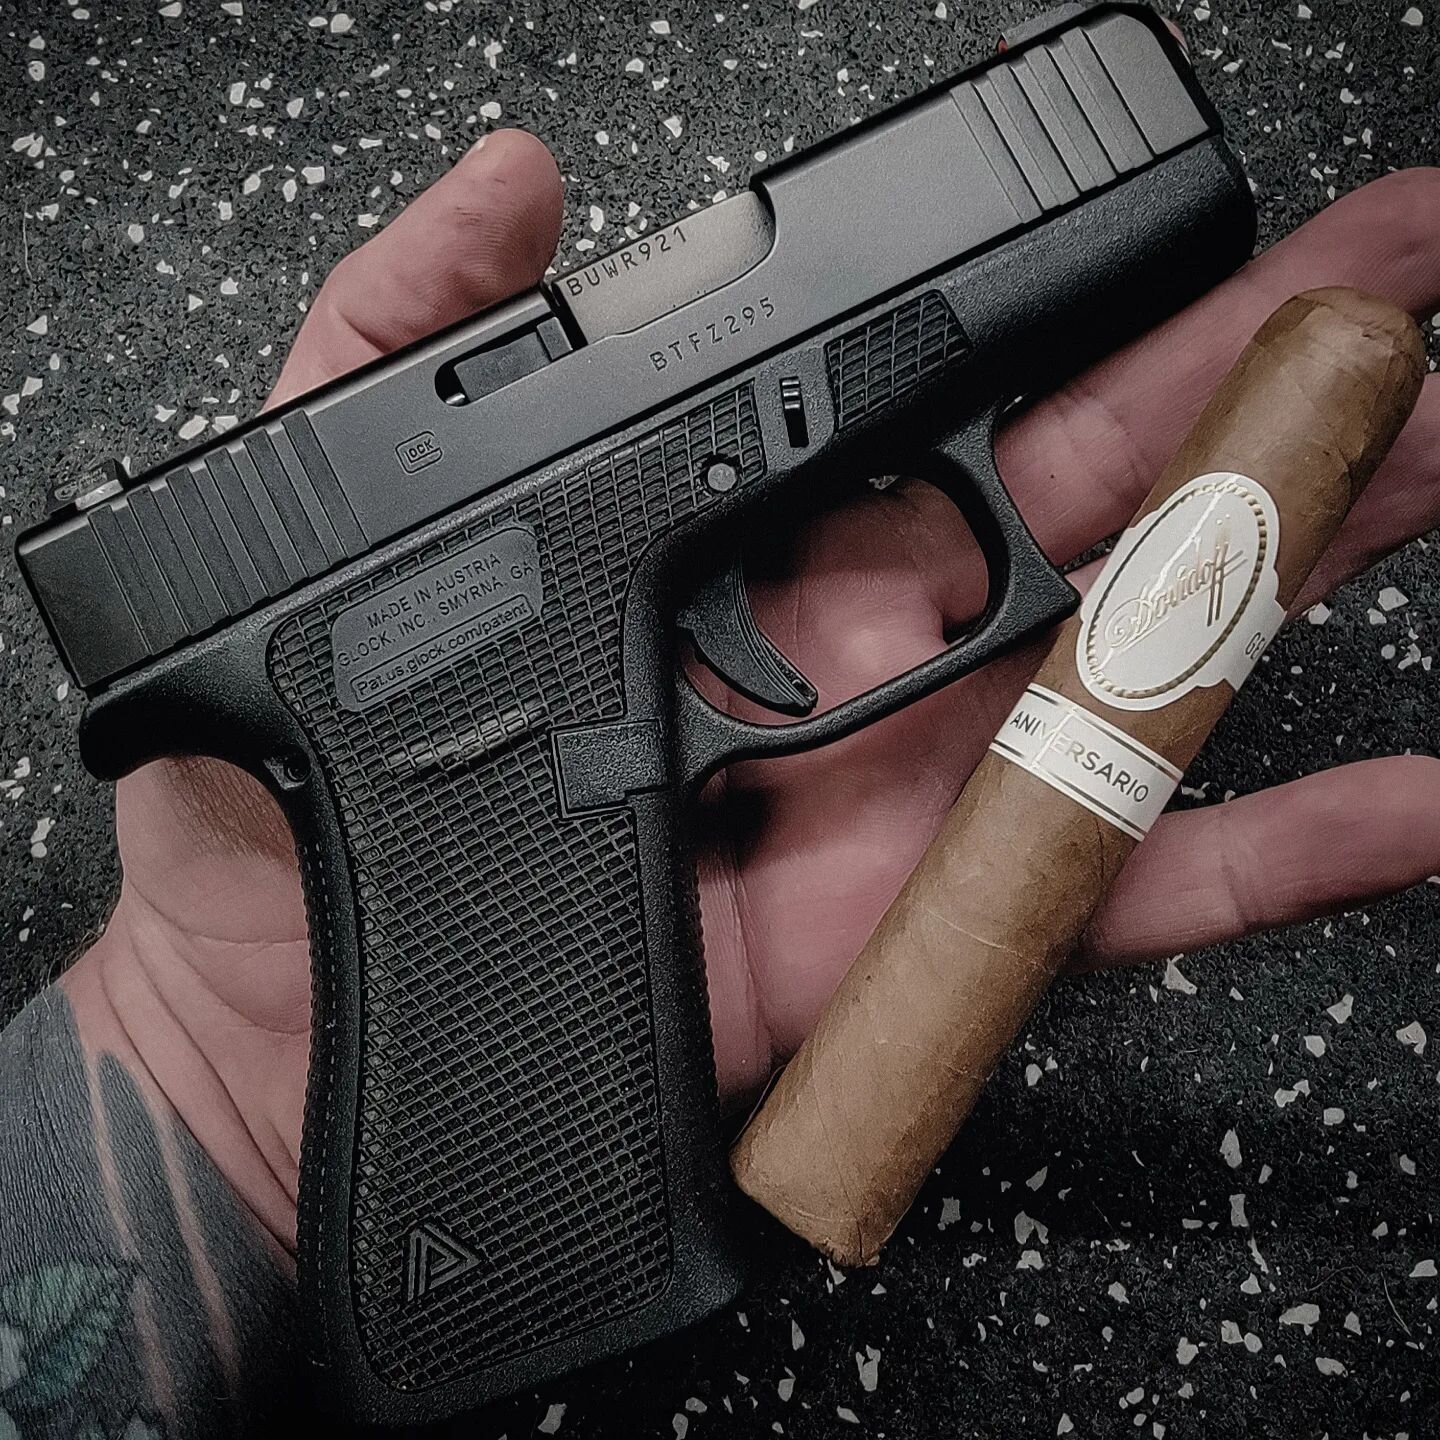 Glock 43X Elite
.
.
.
#cigars #glock43x #gunsdaily #glockfanatics #glockfeed #cigarsociety #everydaycarry #gunfeed #gunhub #gunsandammo #glock #glocknation #gunfanatics #weaponsdaily #laserstippling #gunsofinstagram #cigarsandguns #davidoffcigars